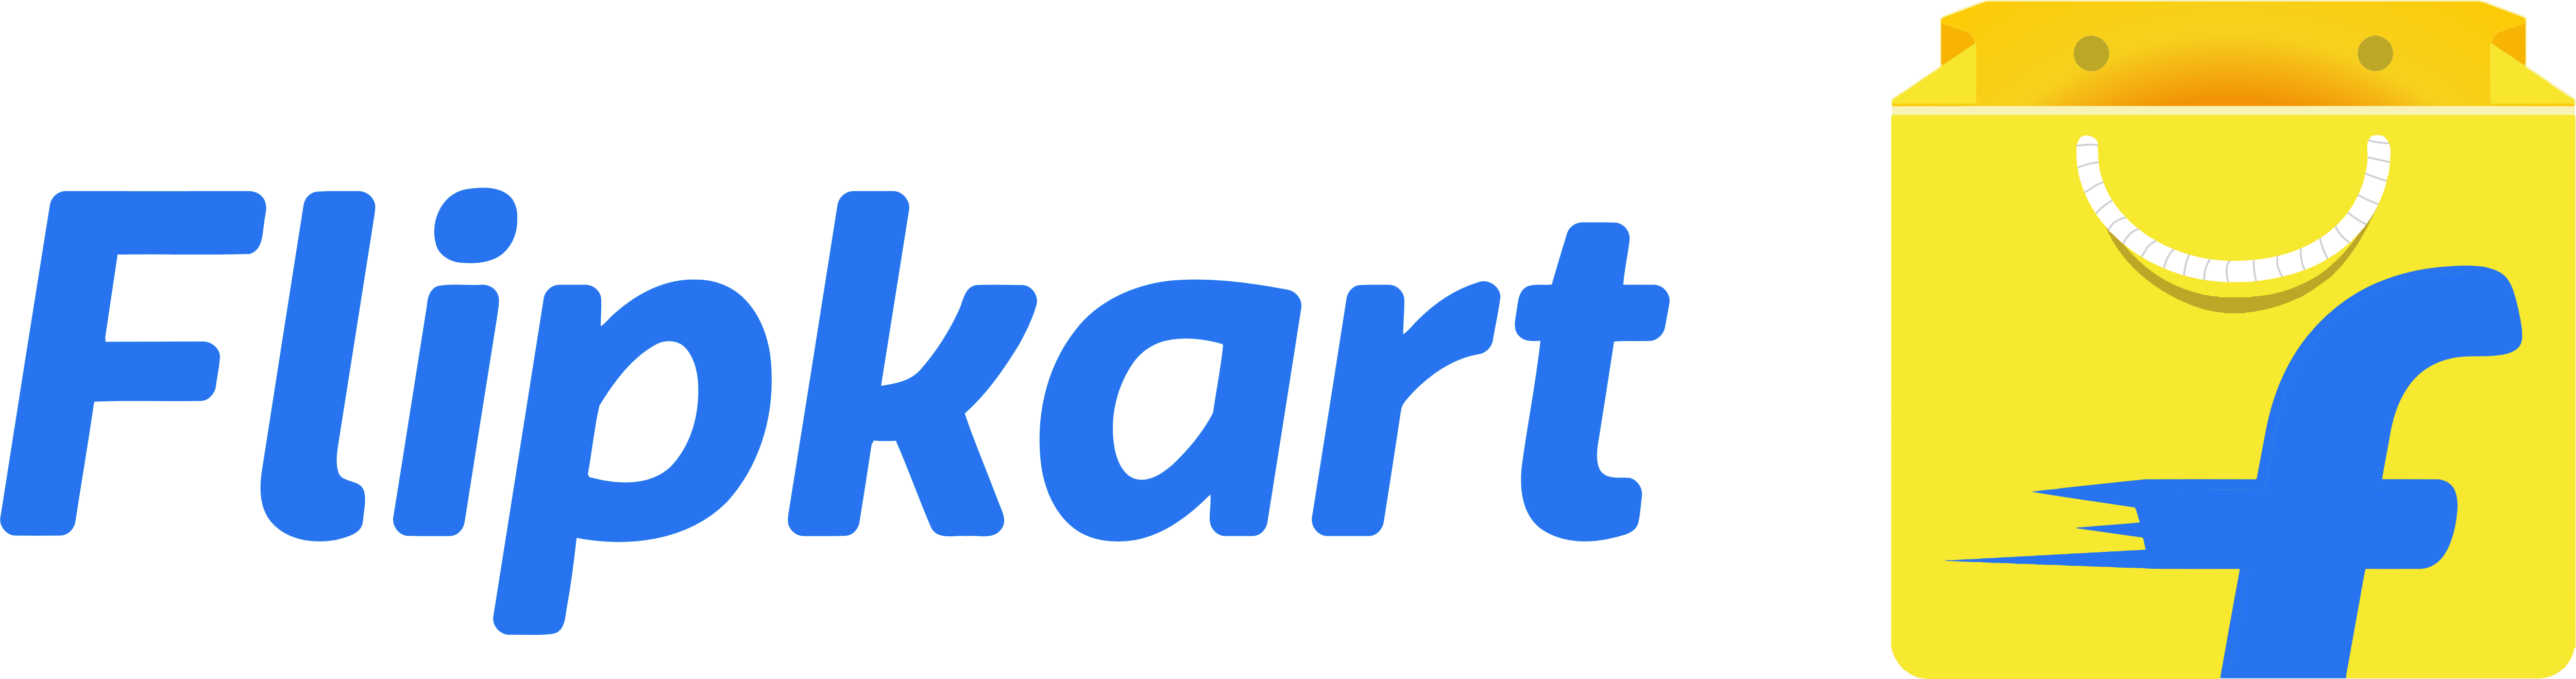 Flipkart Logo Vector PNG - 112284